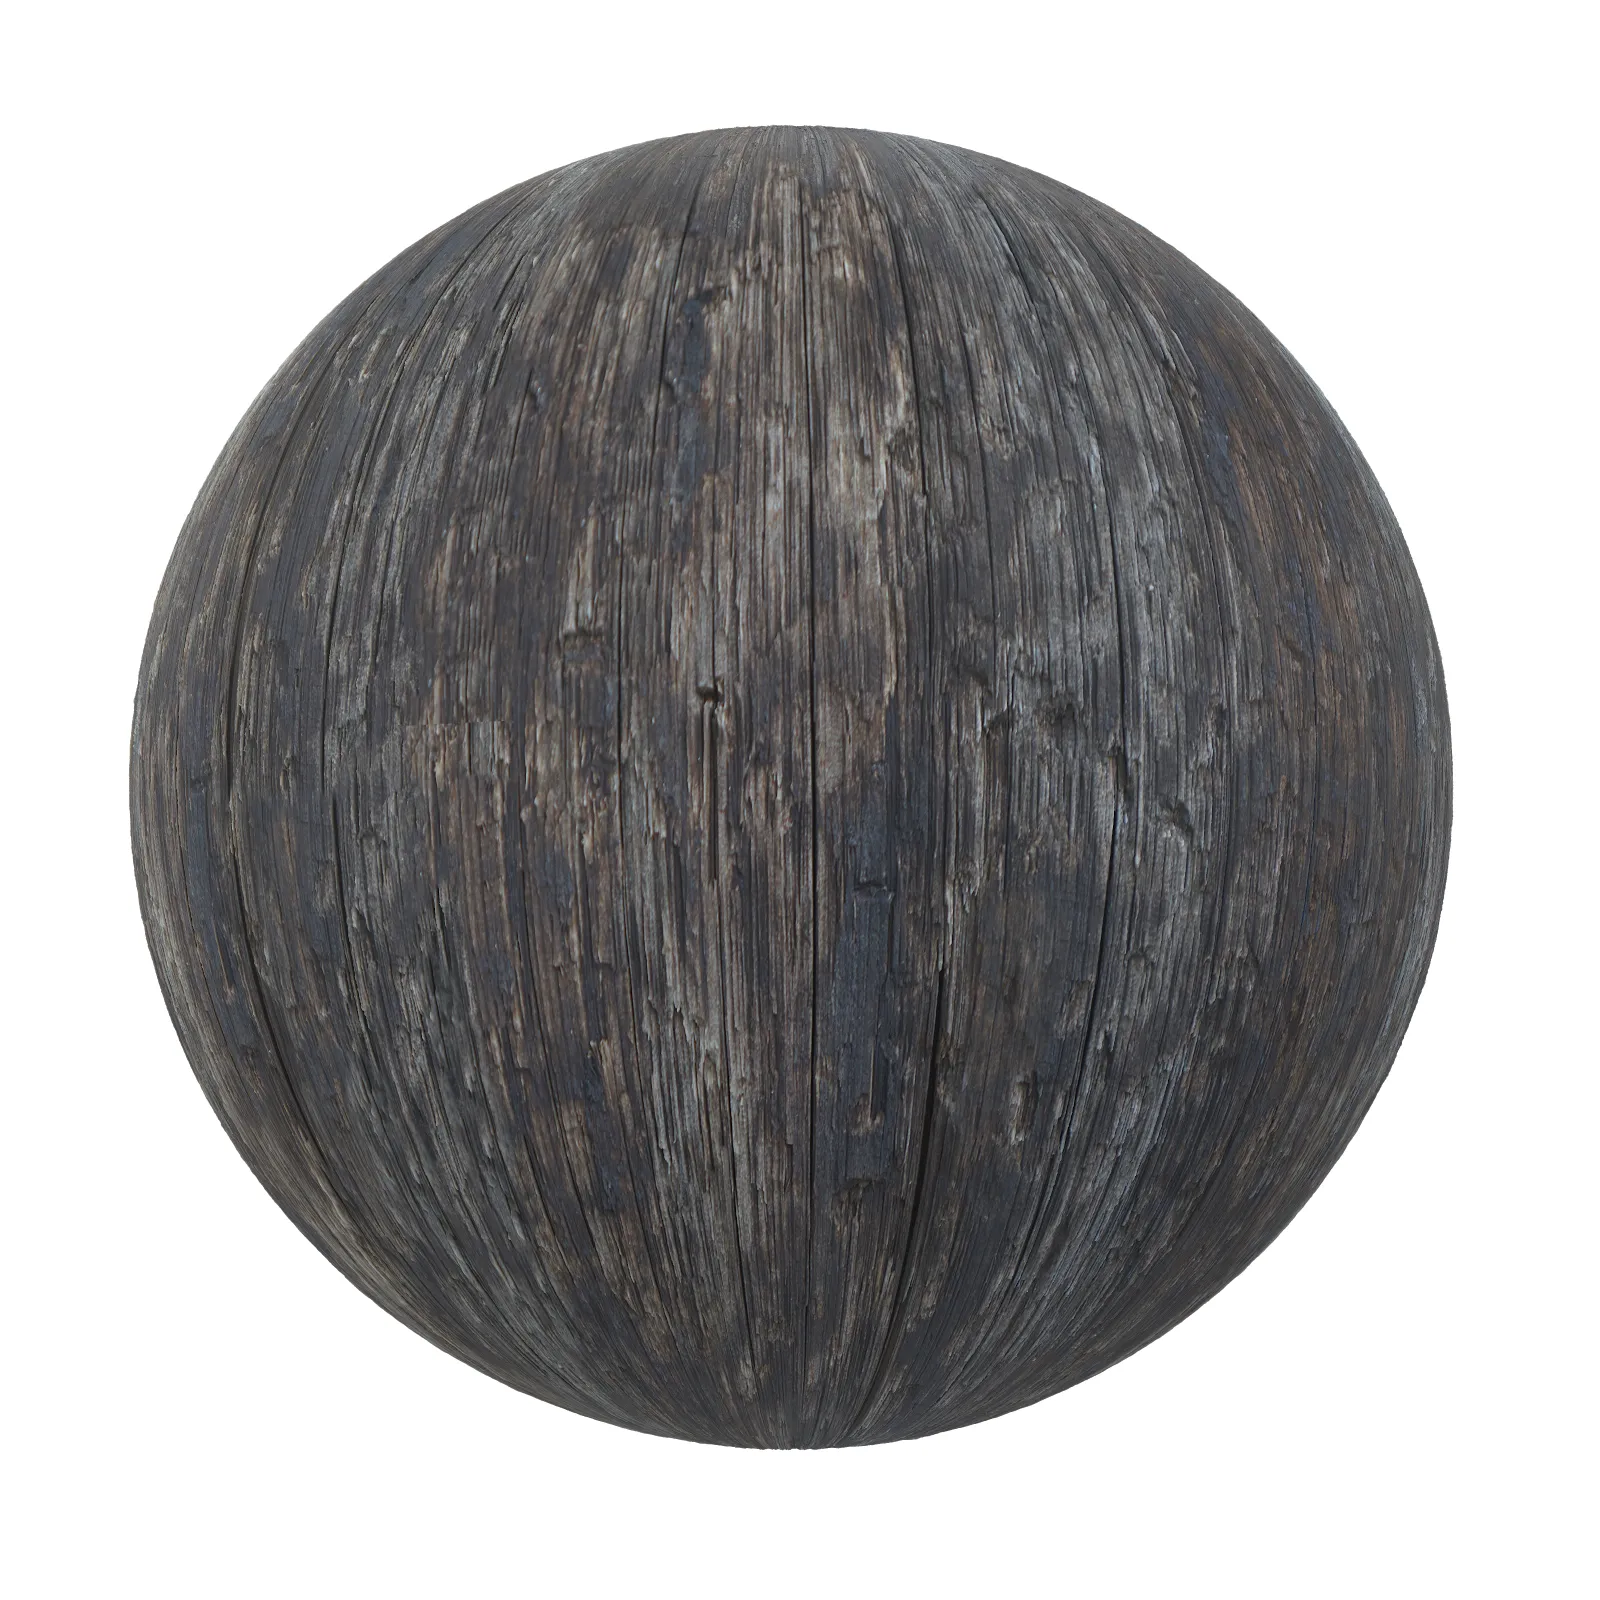 3ds Max Files – Texture – 8 – Wood Texture – 111 – Wood Texture by Minh Nguyen